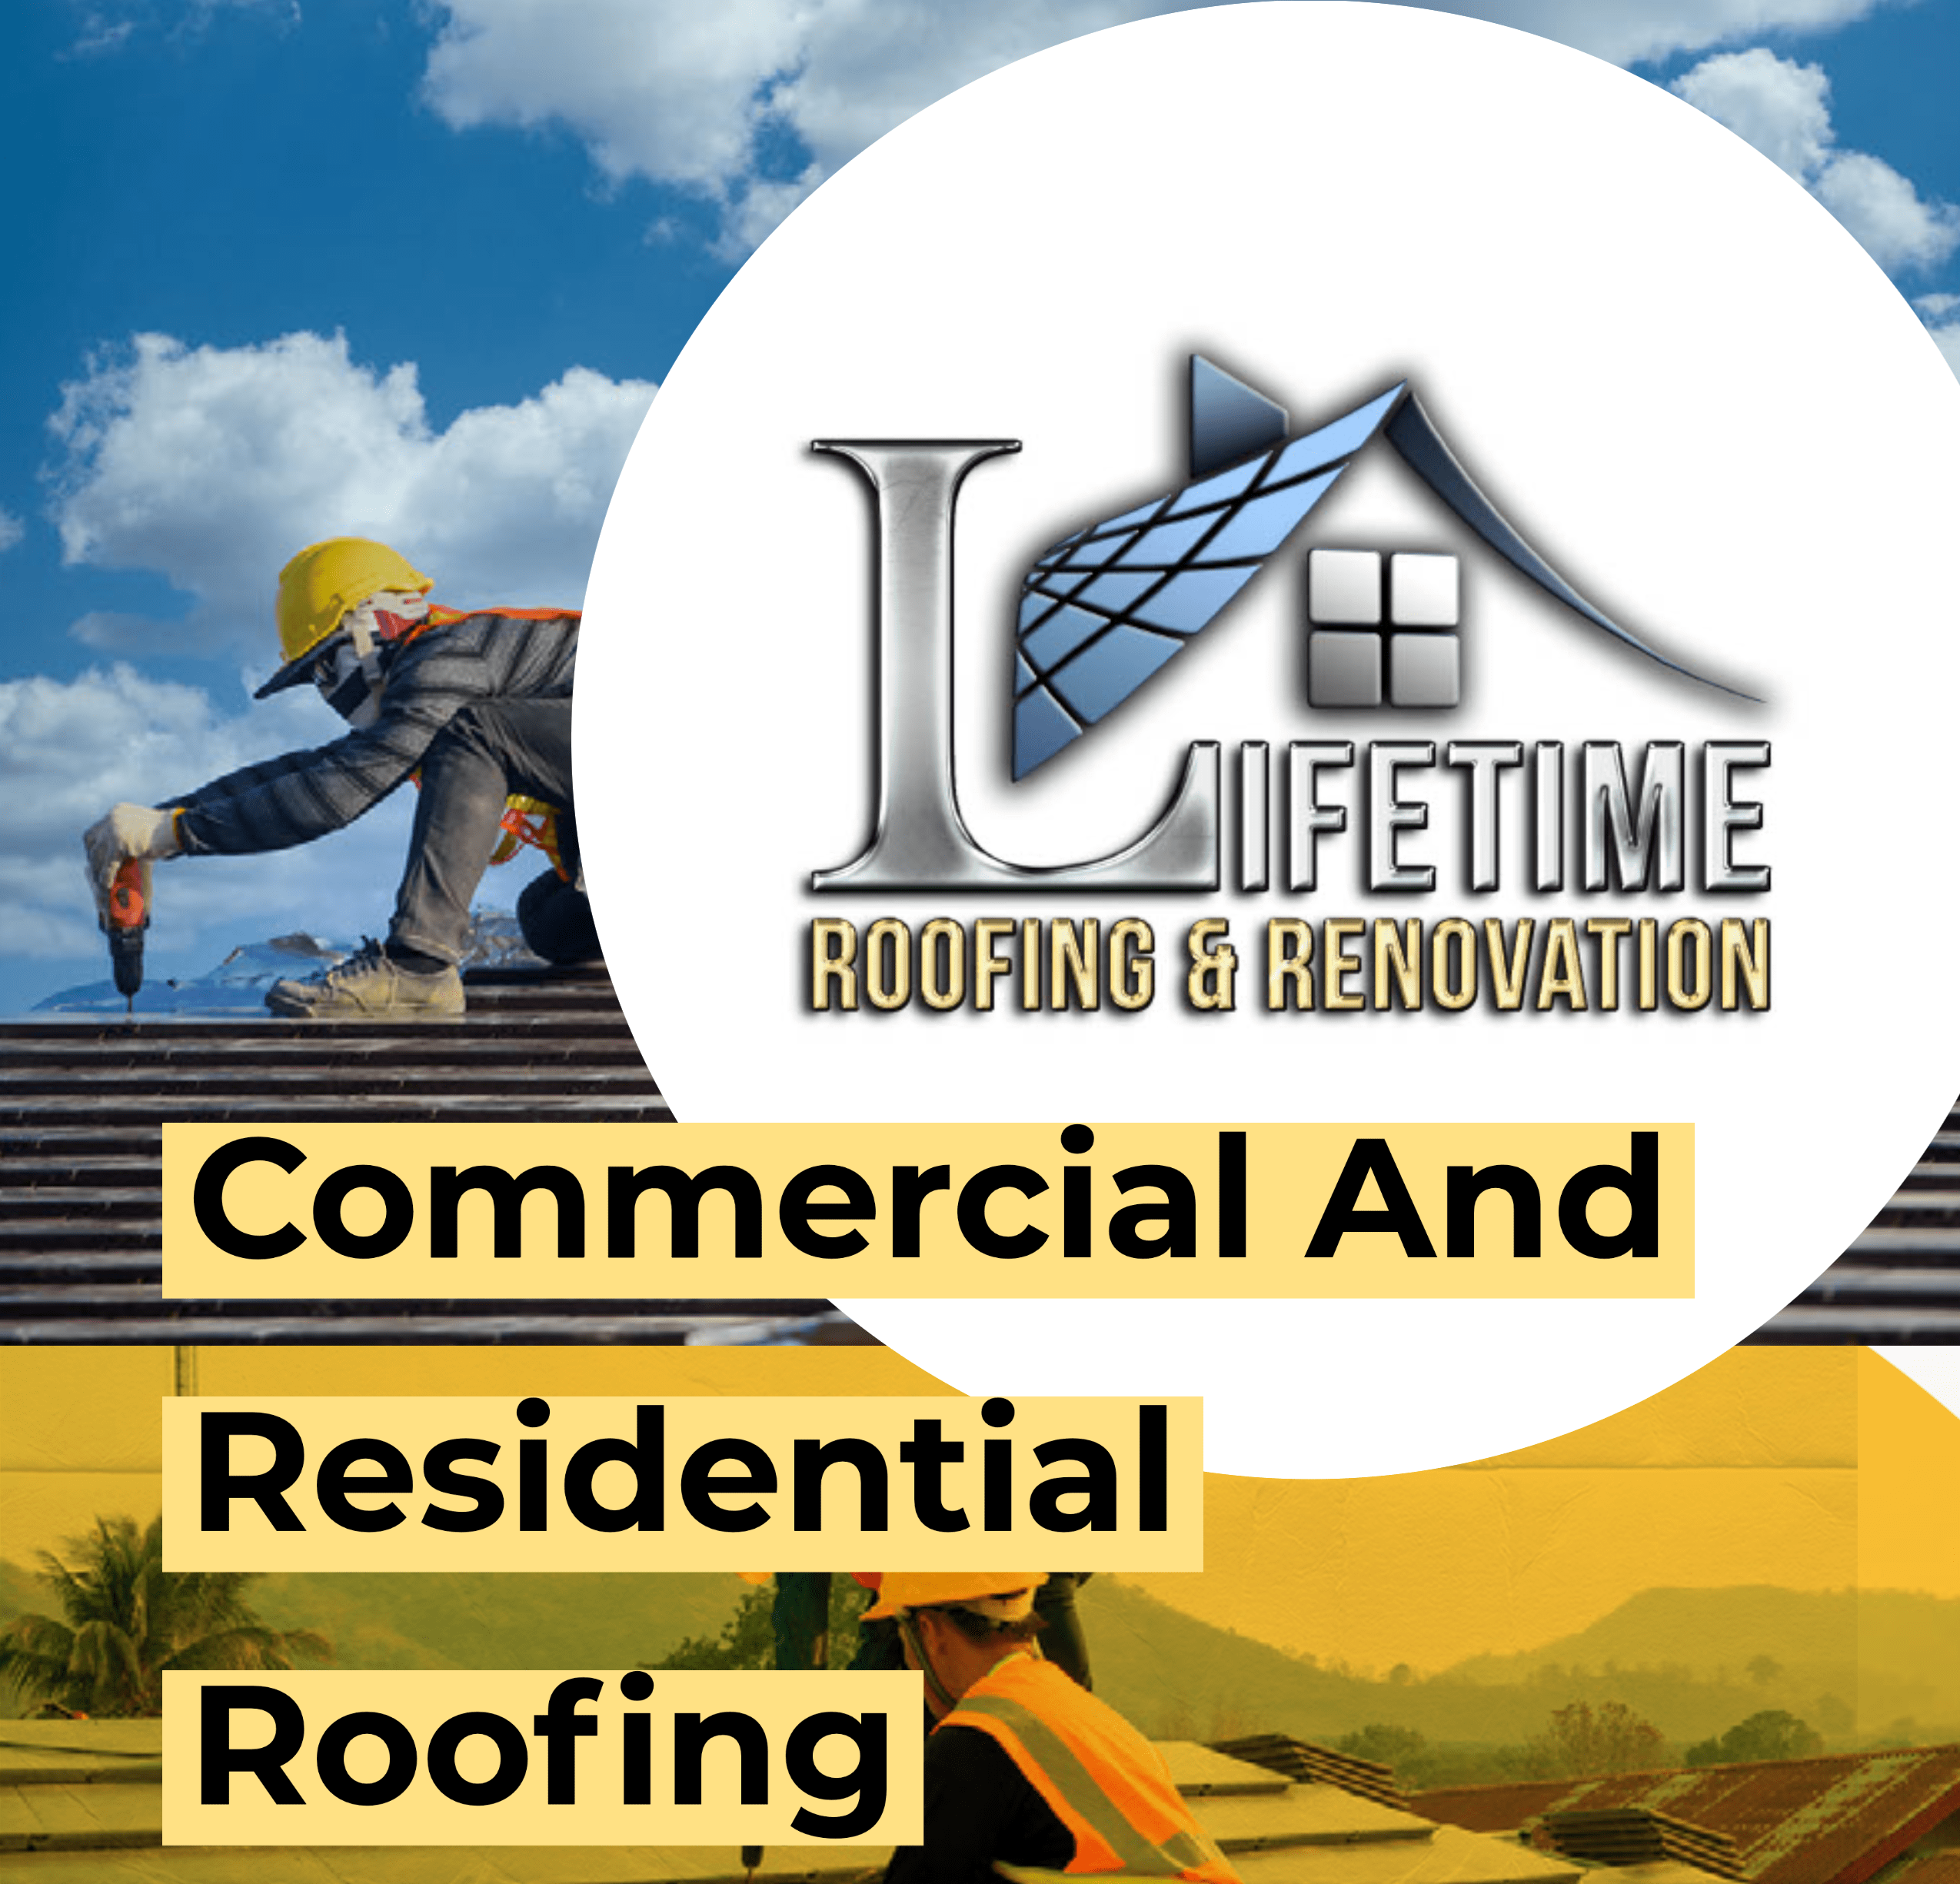 Lifetime Roofing & Renovation, Inc. San Jose roofing contractors